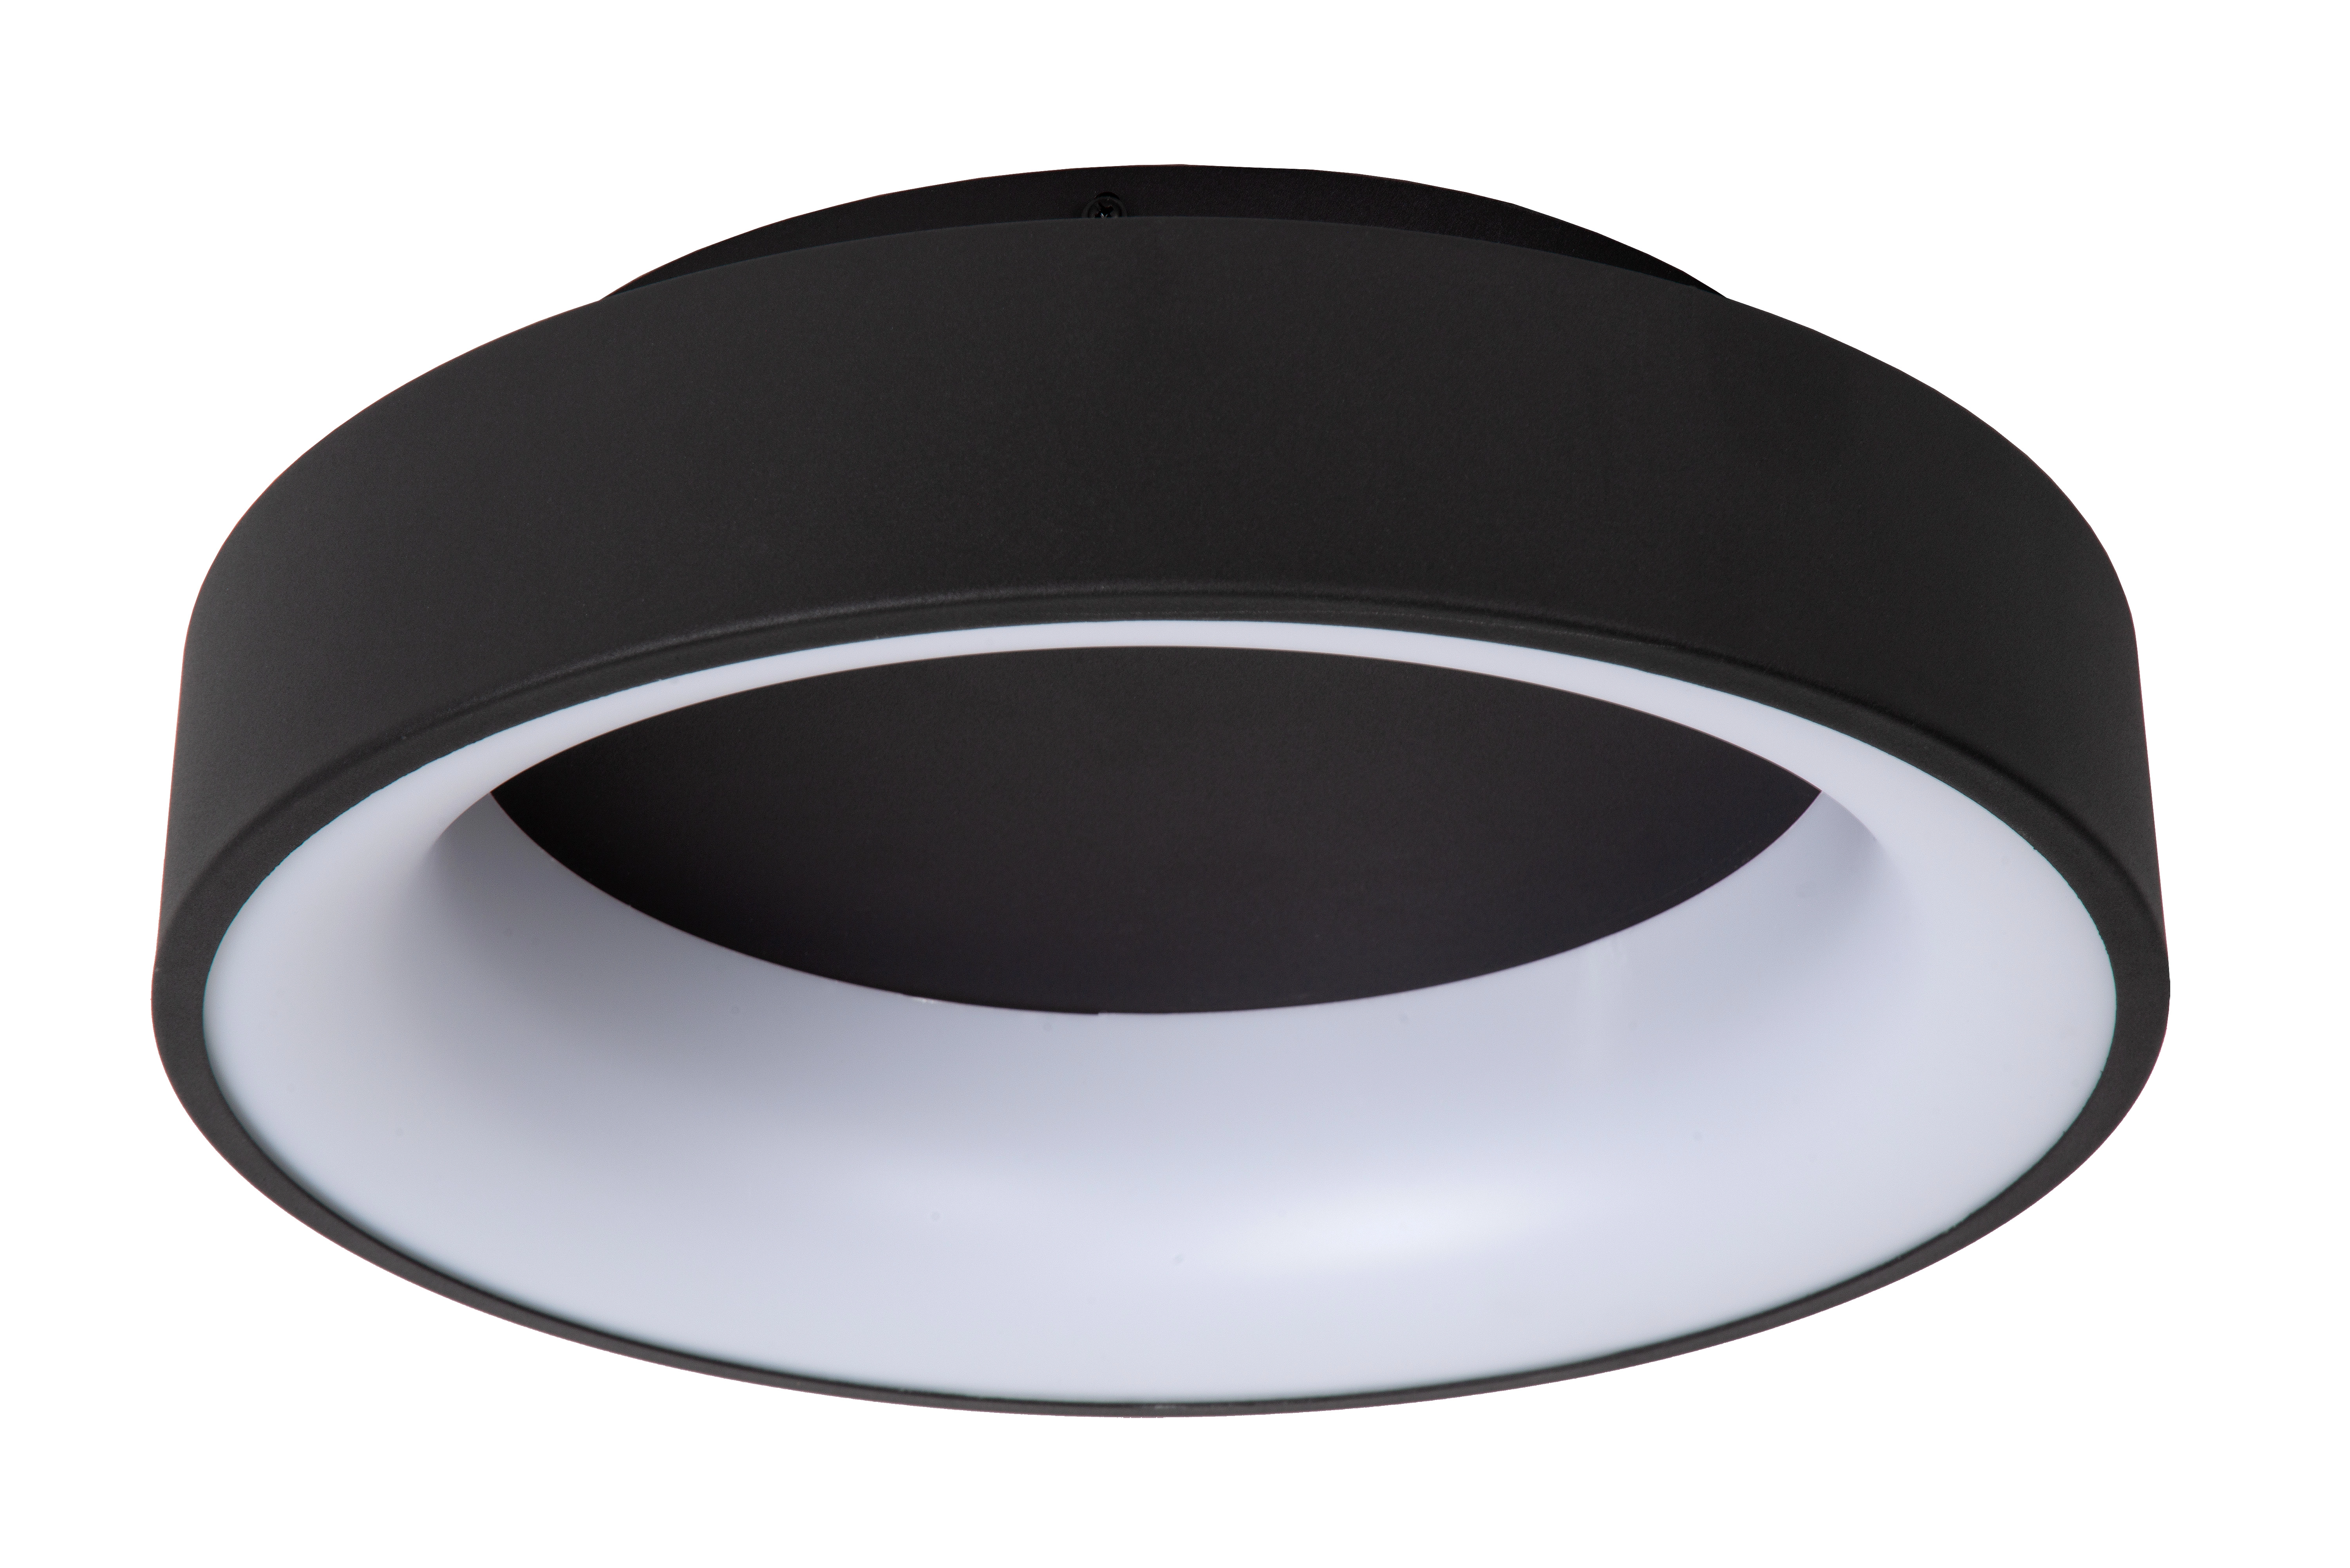 LU 36114/18/30 Lucide MIRAGE - Flush ceiling light - Ø 38 cm - LED Dim. - 1x22W 2700K - Black